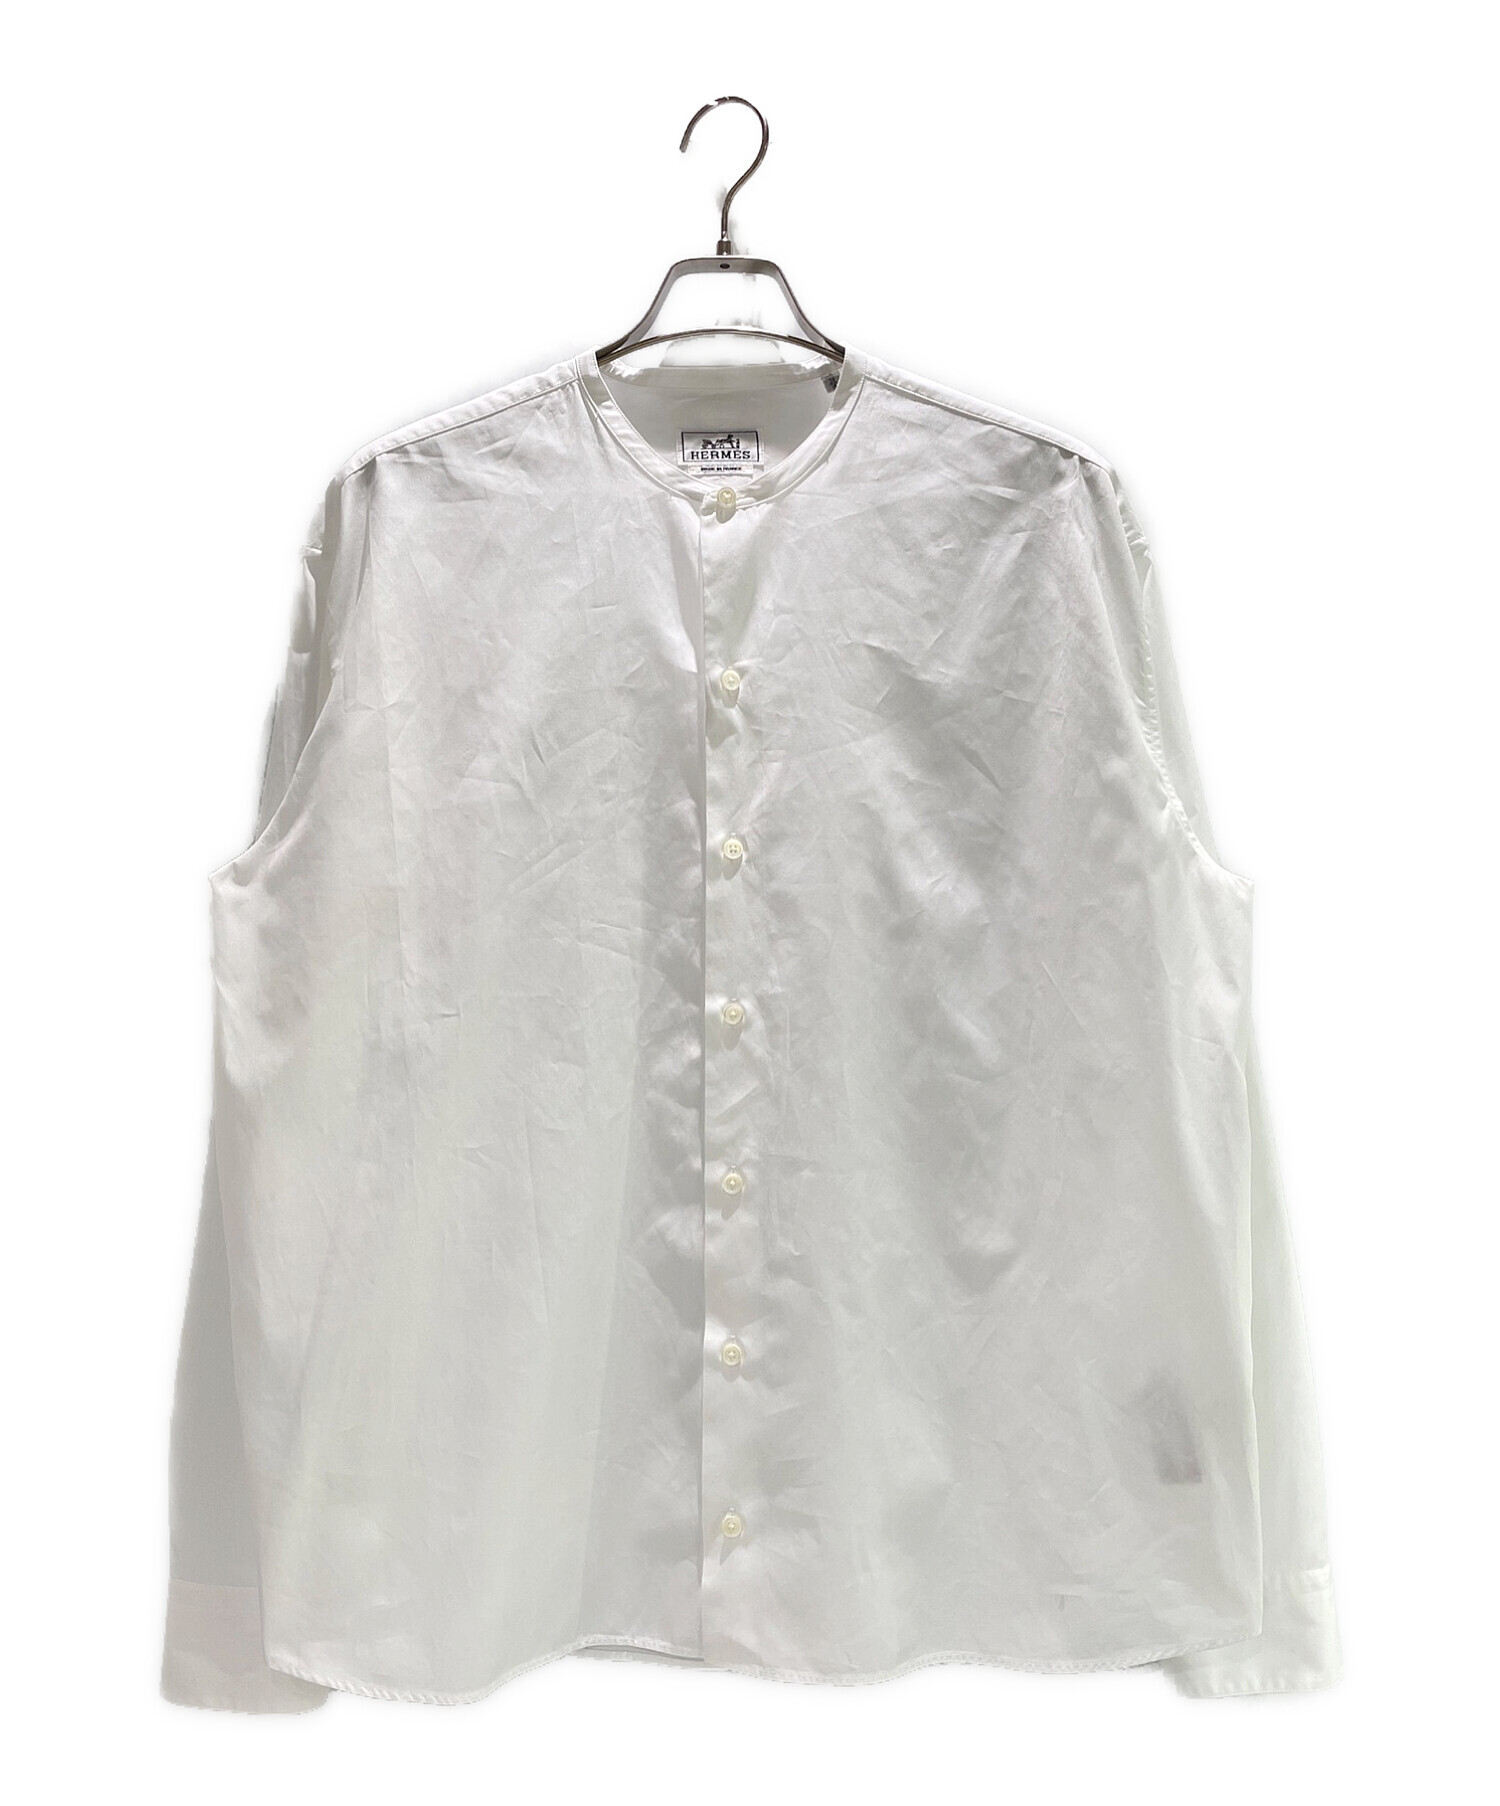 HERMES (エルメス) ノーカラーシャツ ホワイト サイズ:38